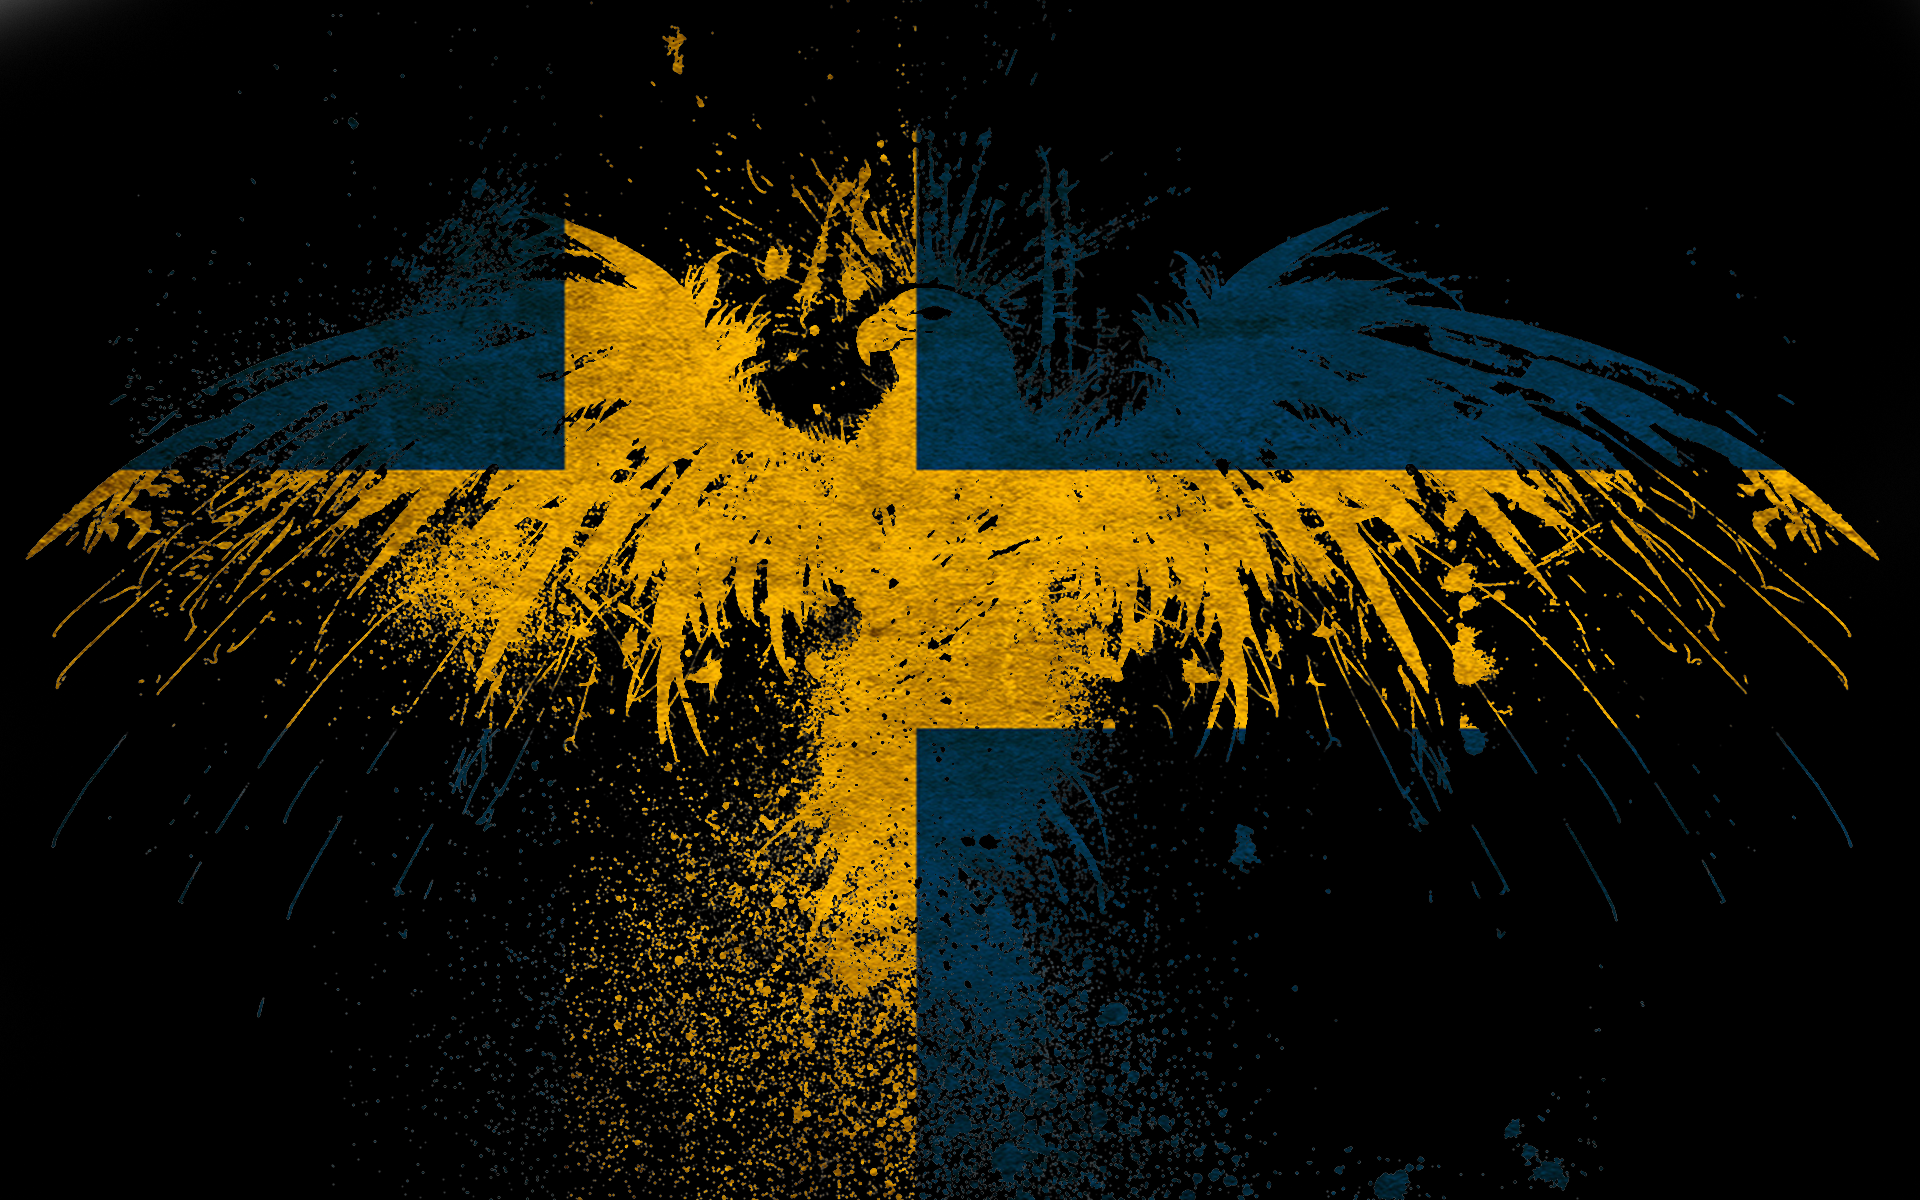 Sweden, eagles, flags - desktop wallpaper